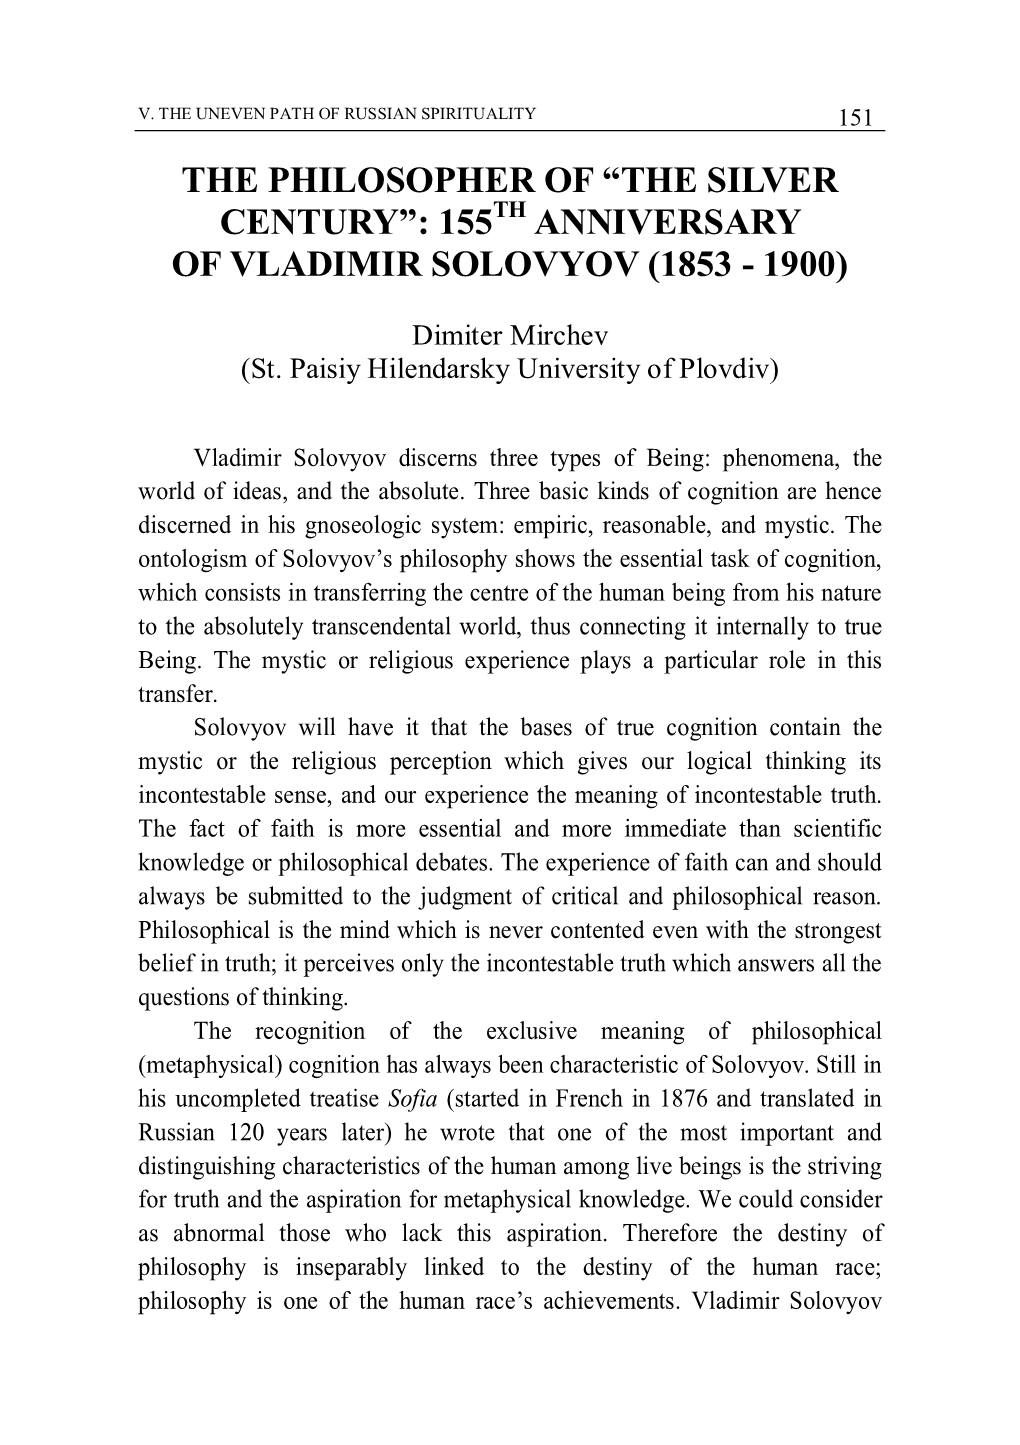 155Th Anniversary of Vladimir Solovyov (1853 - 1900)